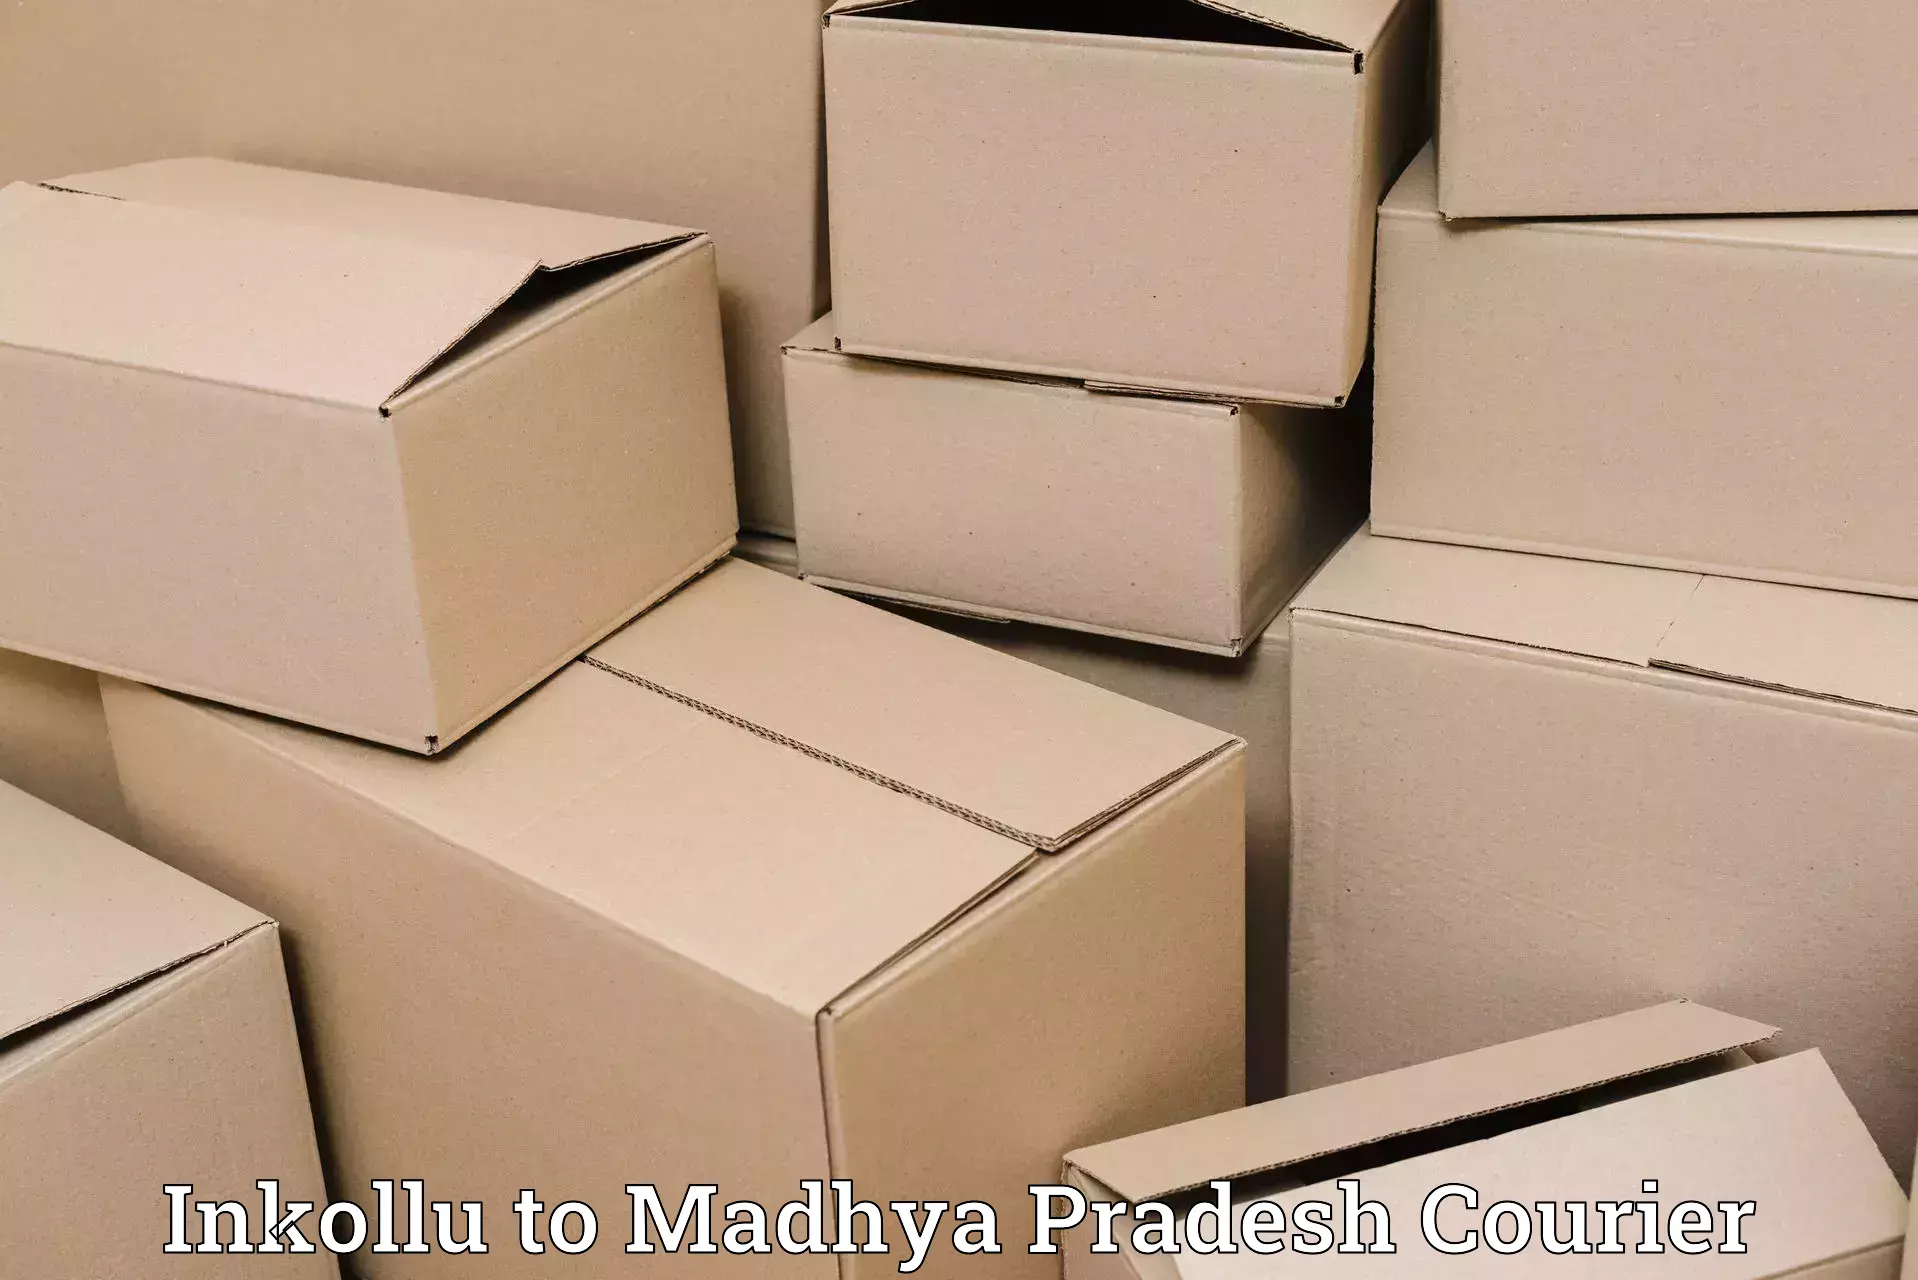 Online courier booking Inkollu to Madhya Pradesh